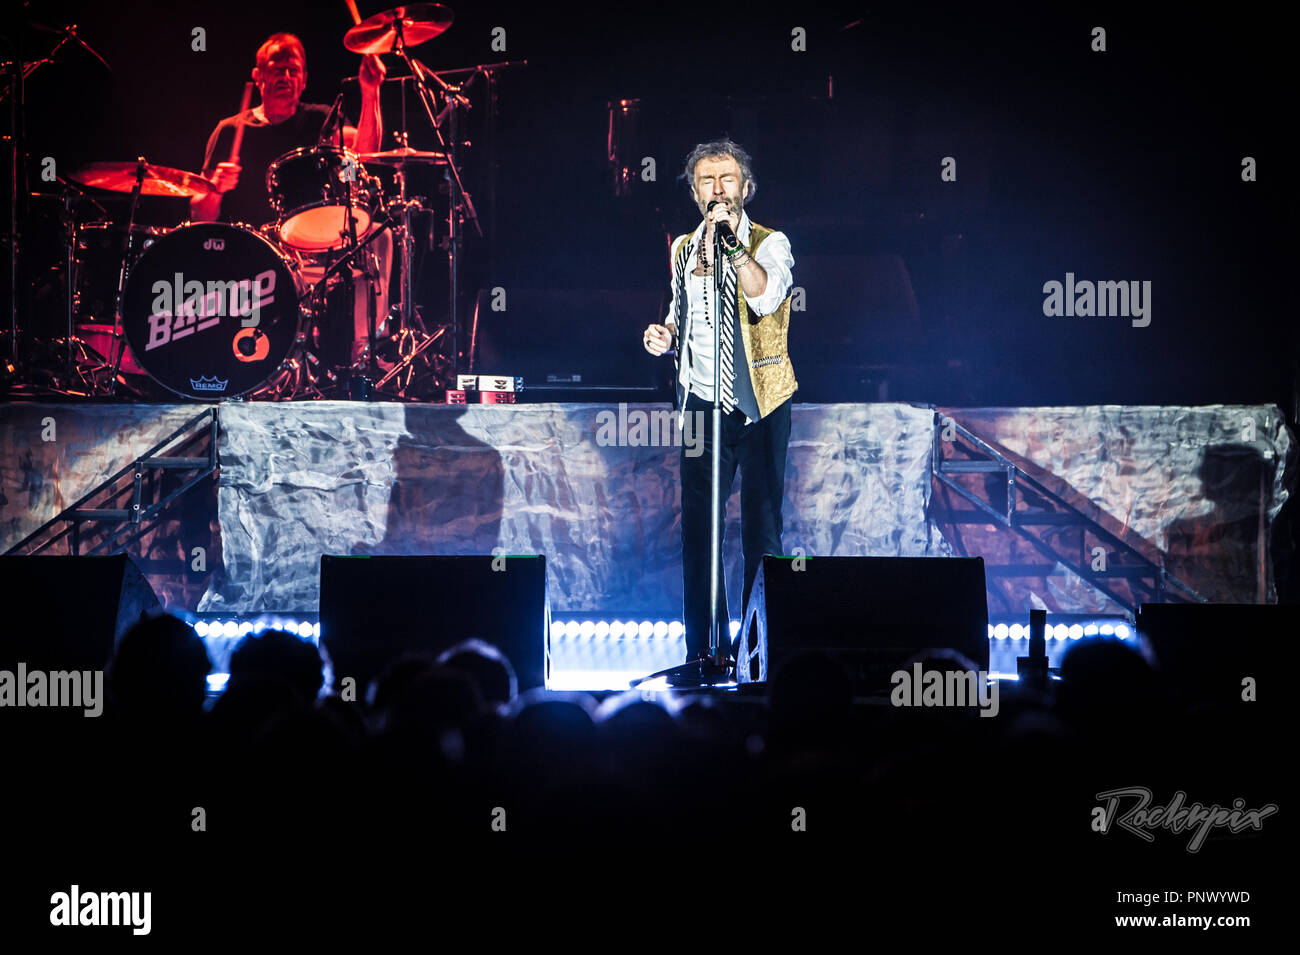 Bad Company live at The O2 Arena London - 29 October 2016 Stock Photo